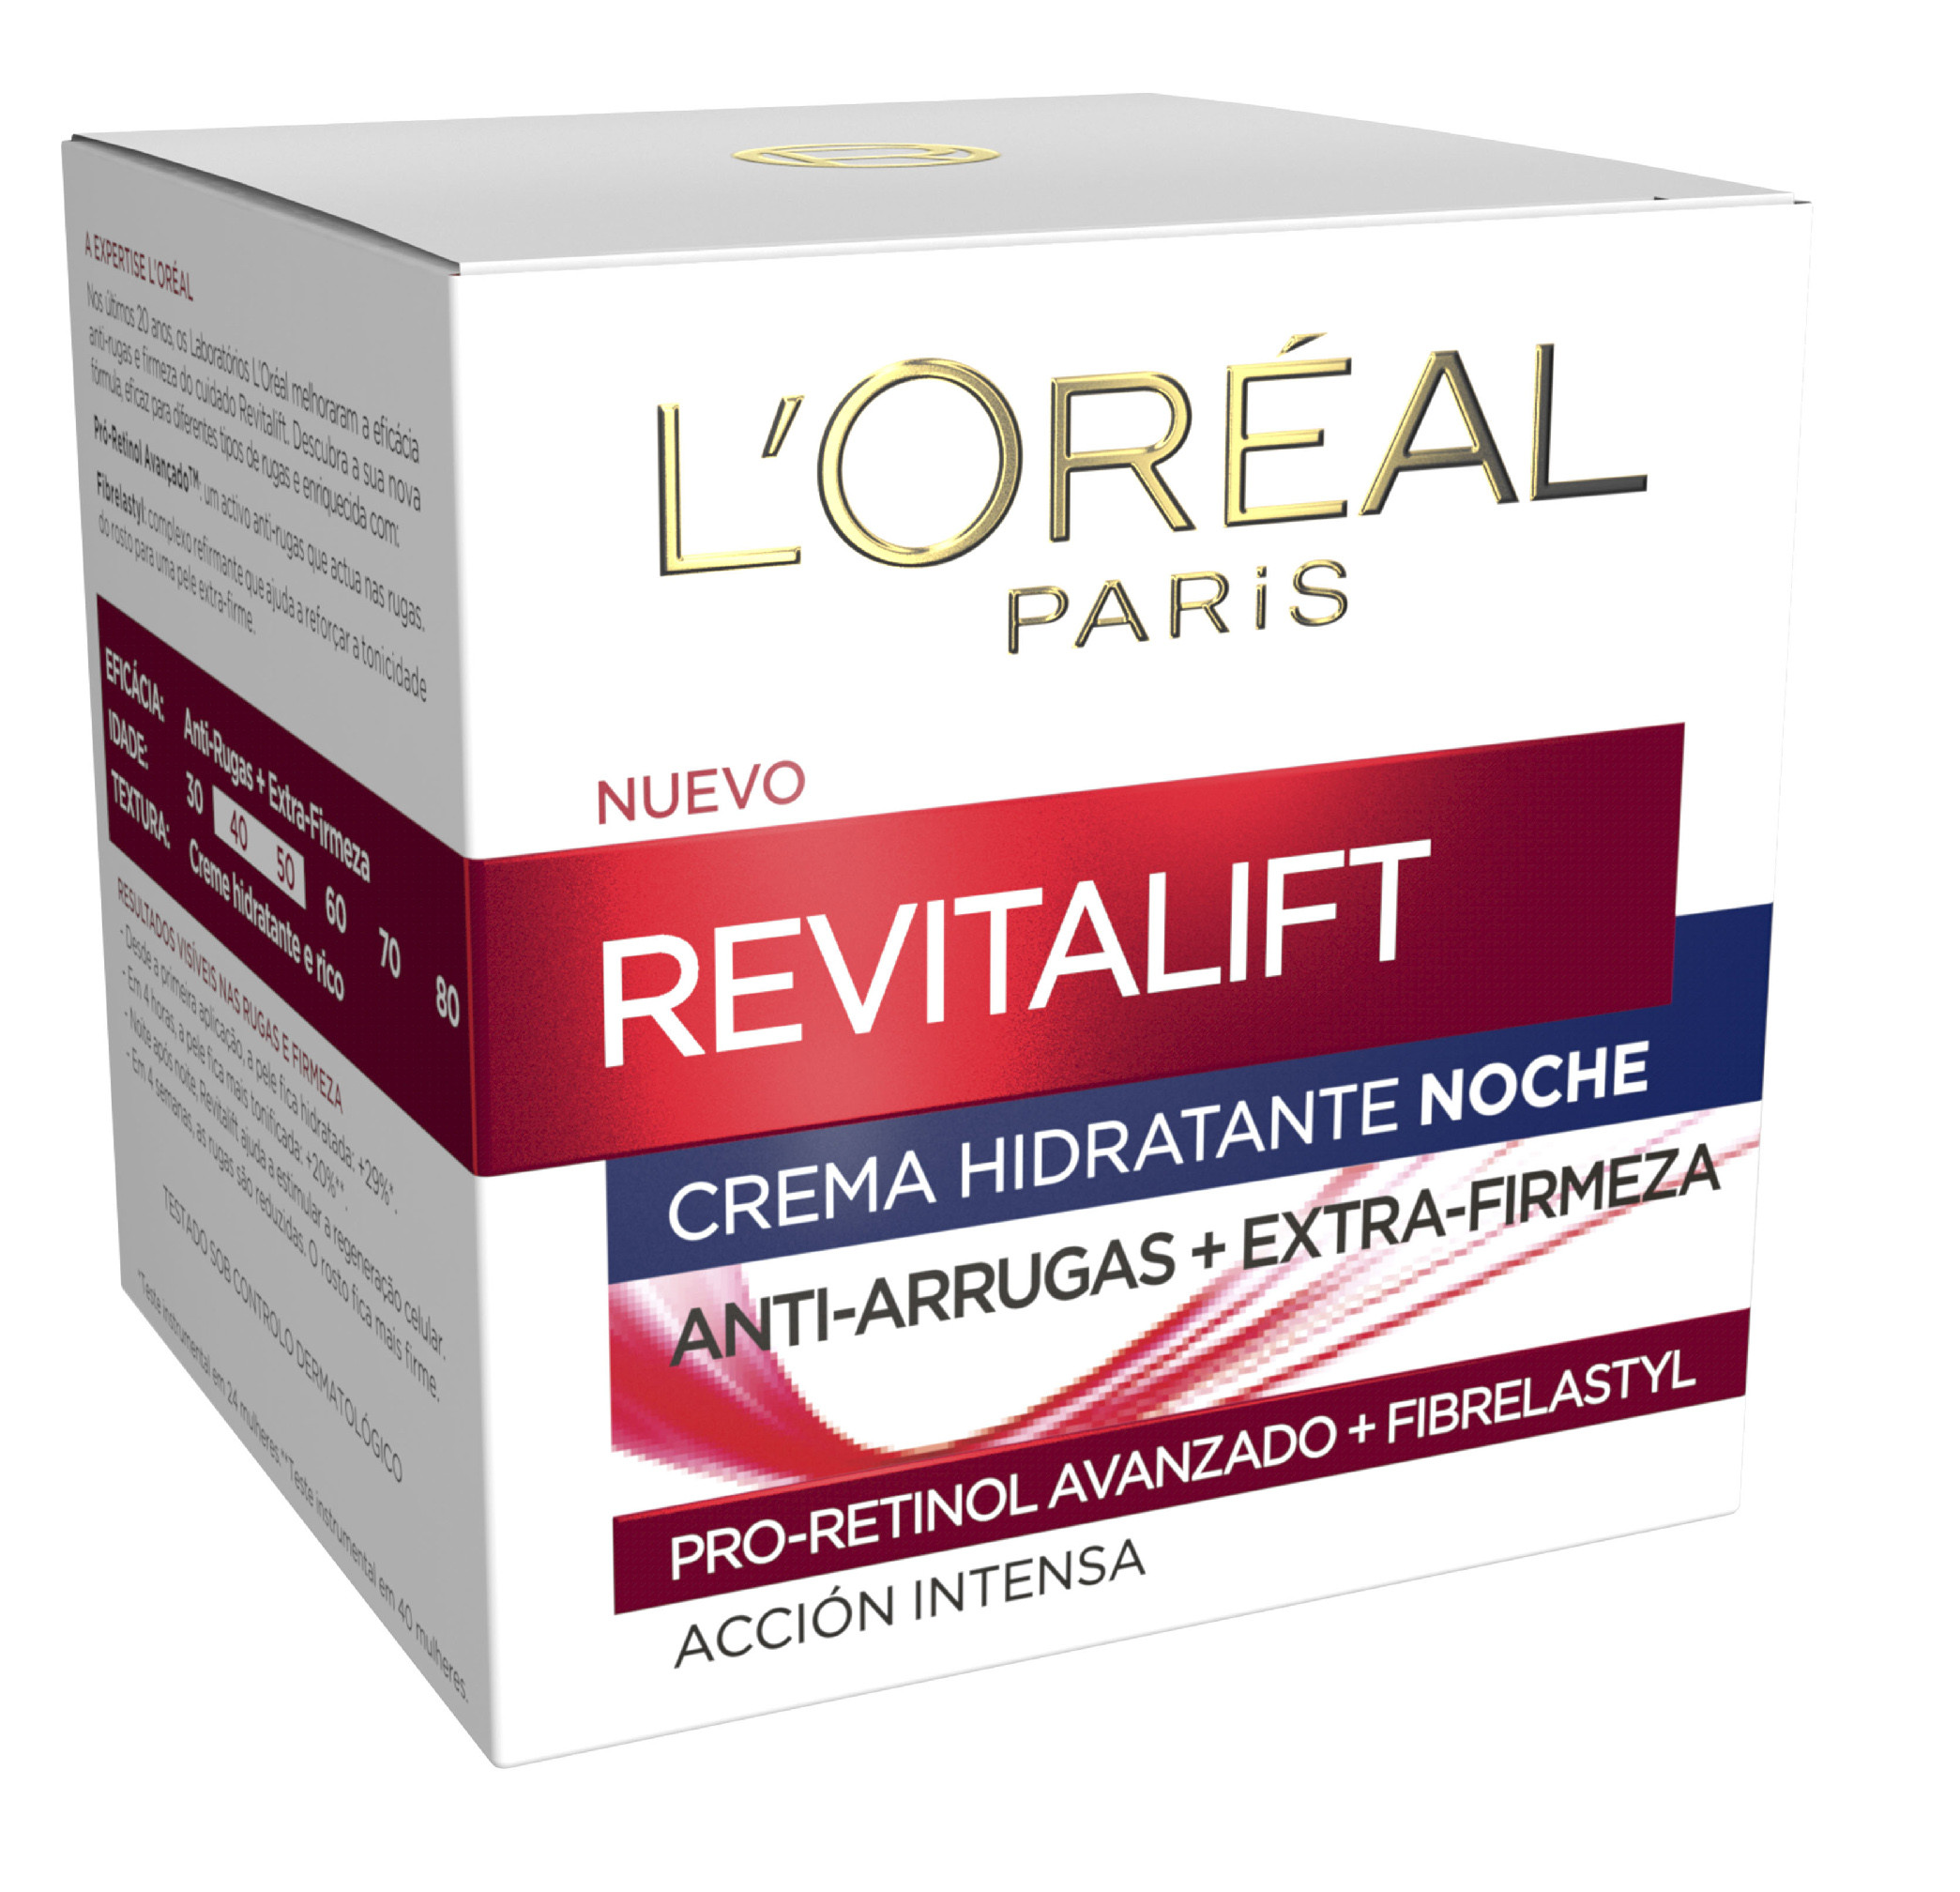 LOREAL PARIS REVITALIFT CREMA HIDRATANTE NOCHE ANTIARRUGAS + EXTRAFIRMEZA 50 ML  (Caja dañada)